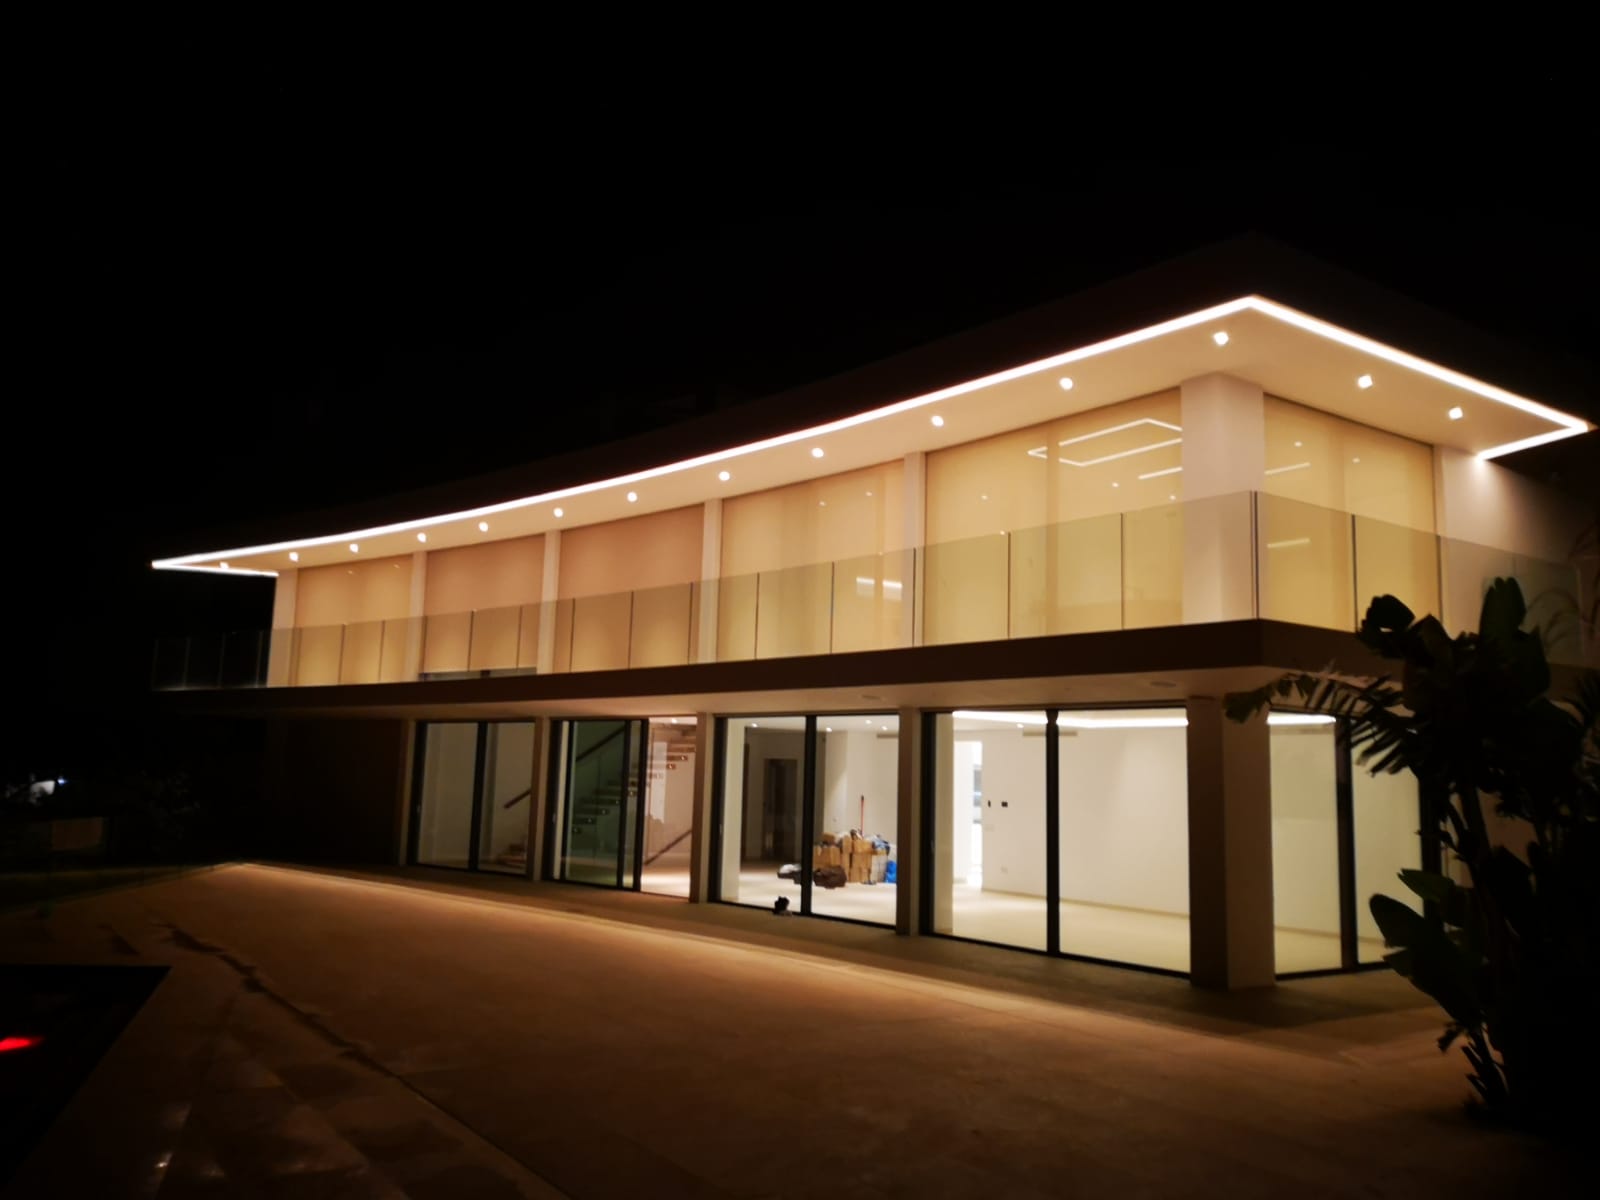 Villa bei Nacht beleuchtet